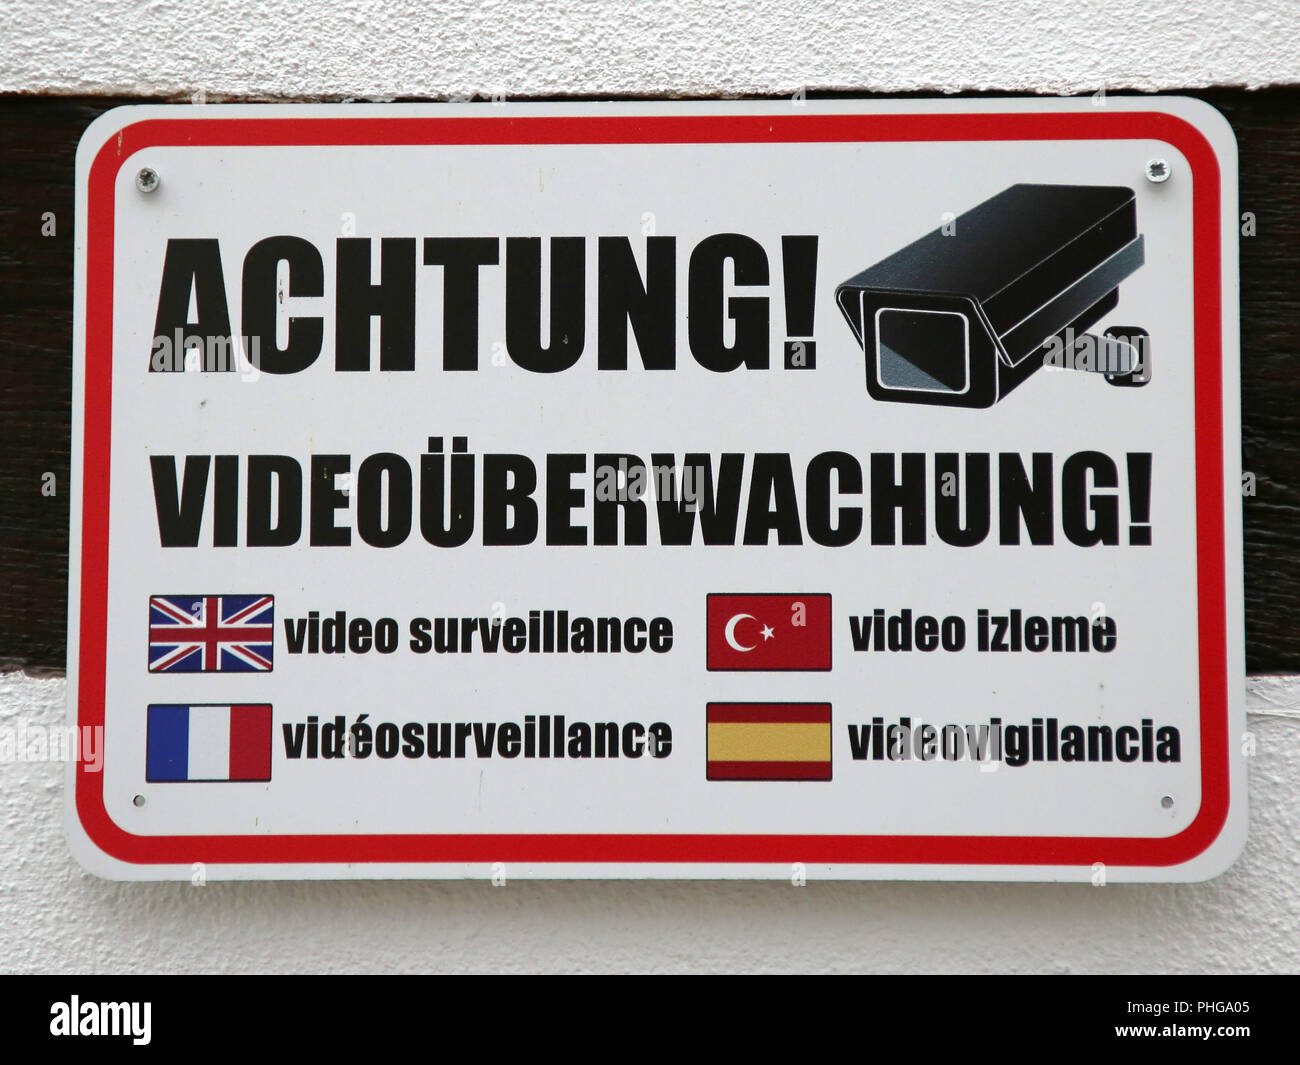 Information label Attention! video surveillance Stock Photo